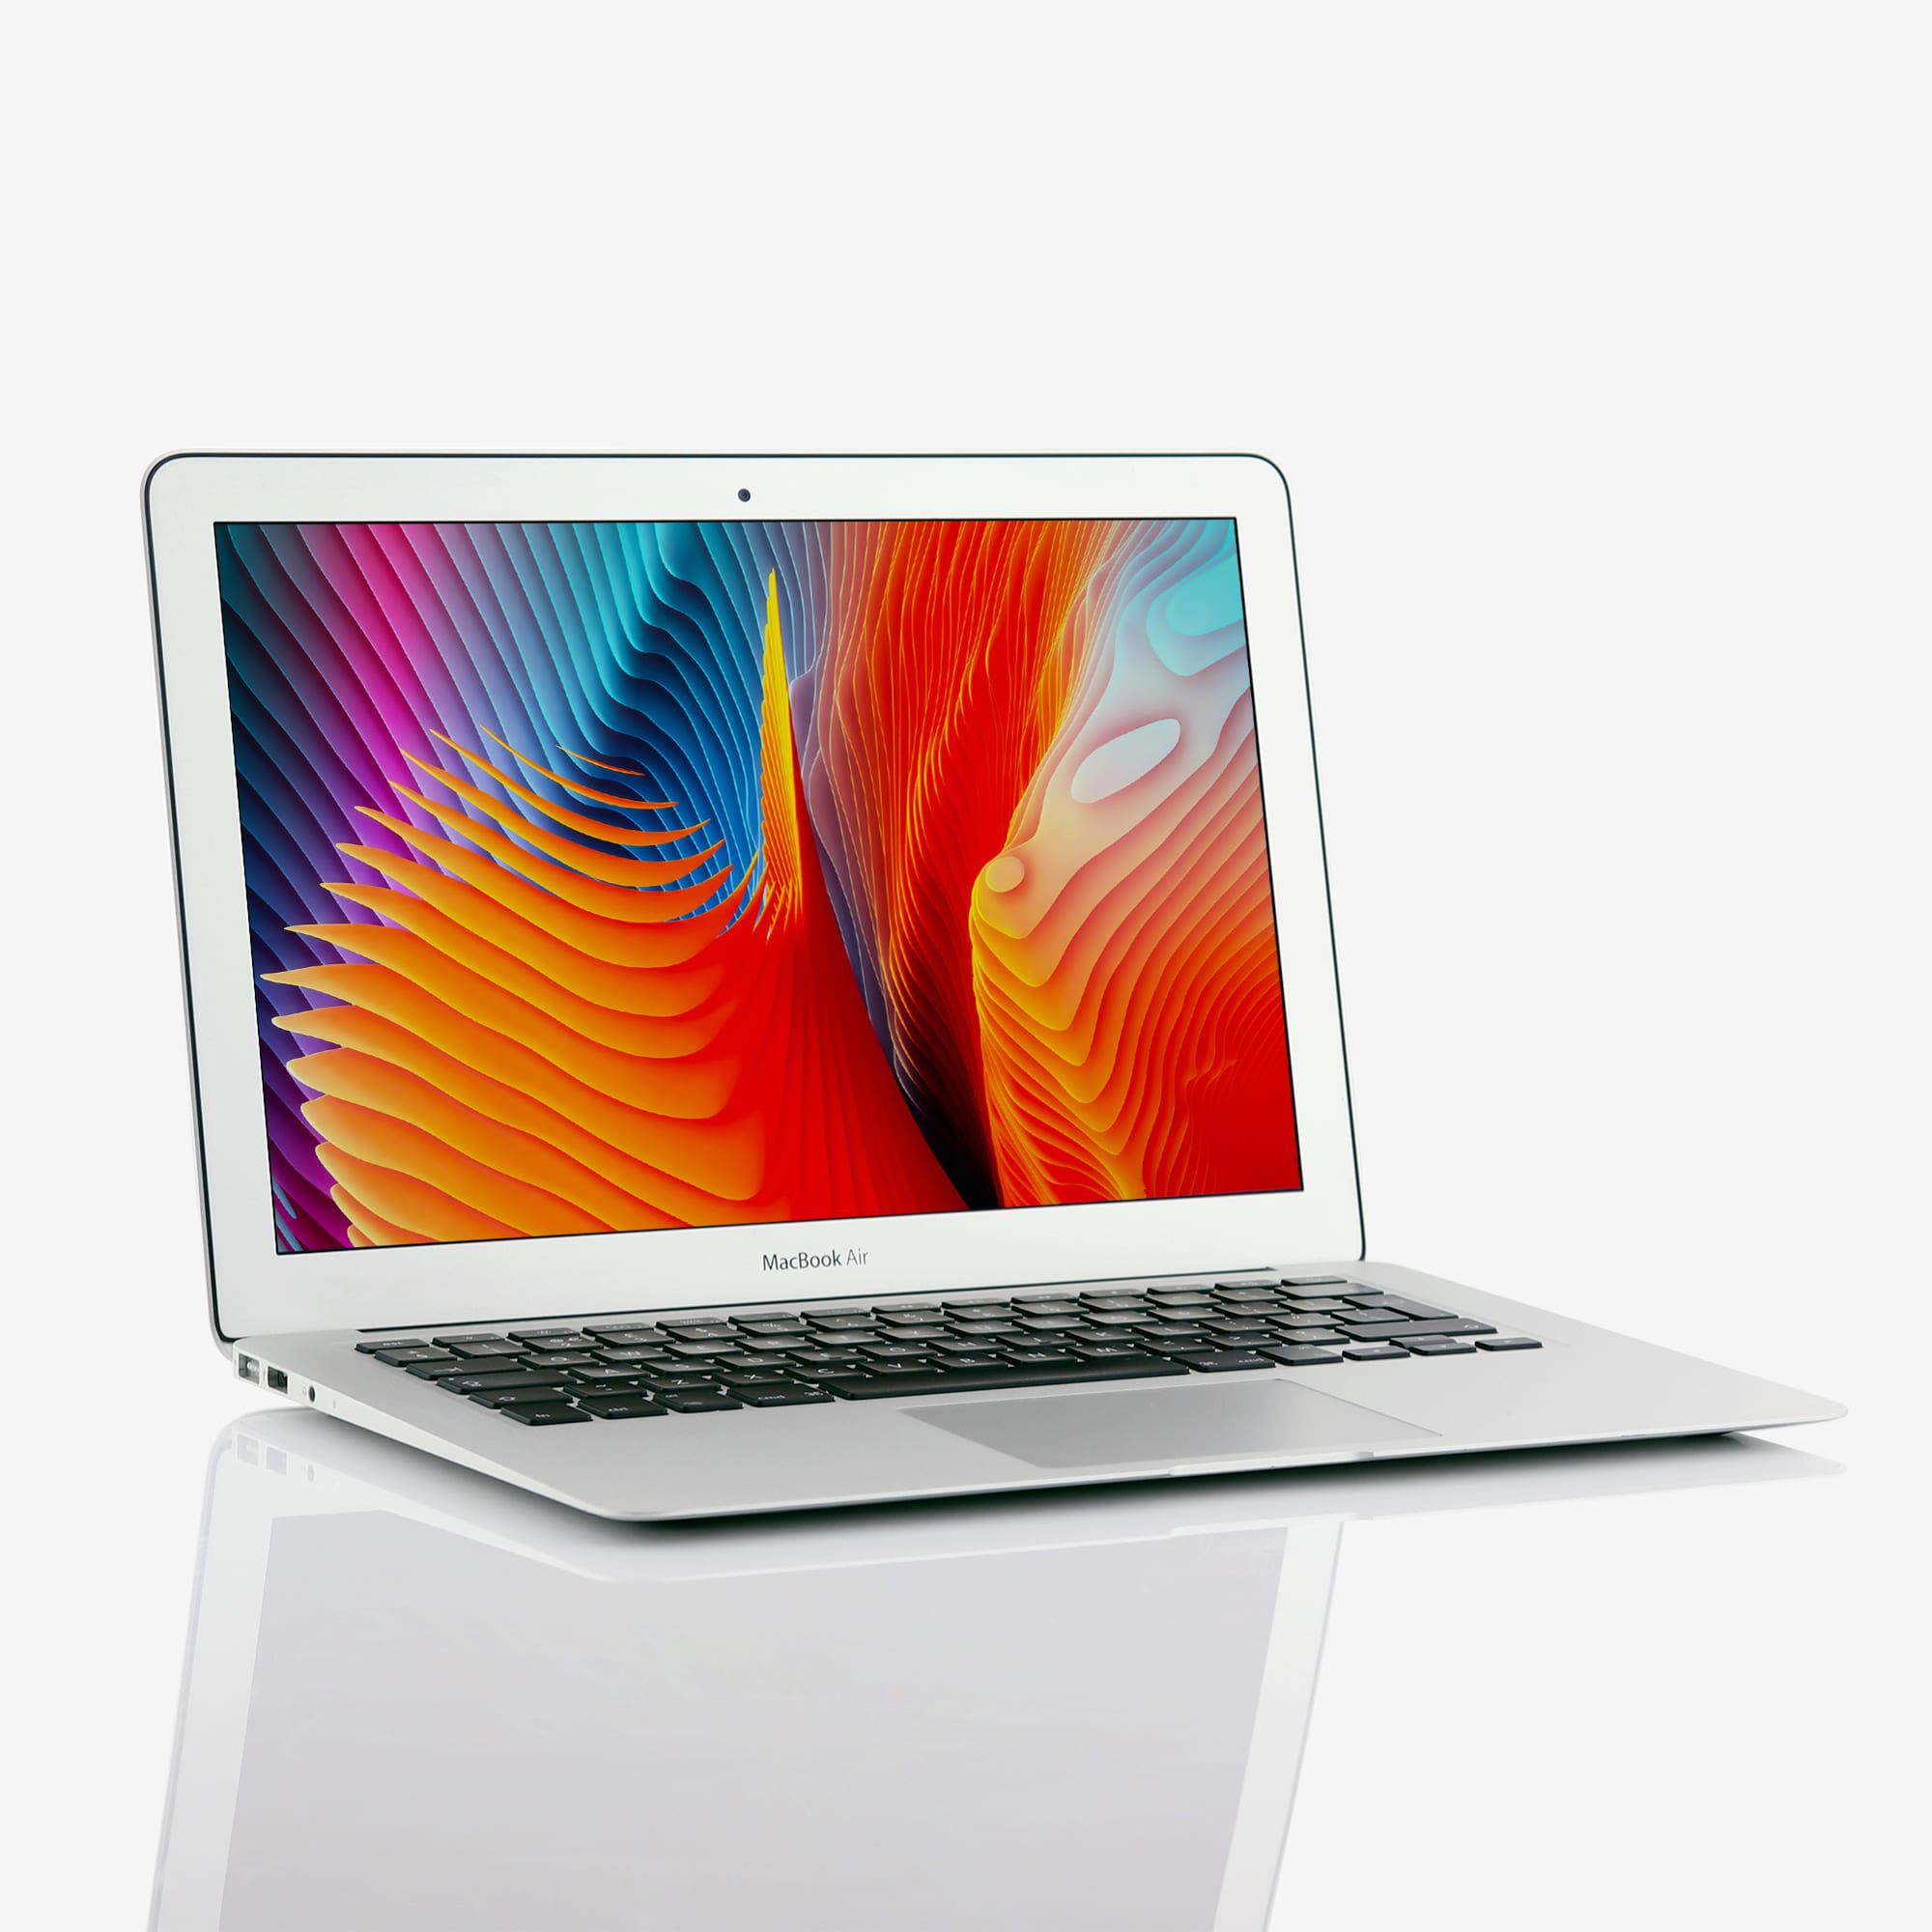 1 x Apple MacBook Air 13 Inch Intel Core i5 1.80 GHz (2012)